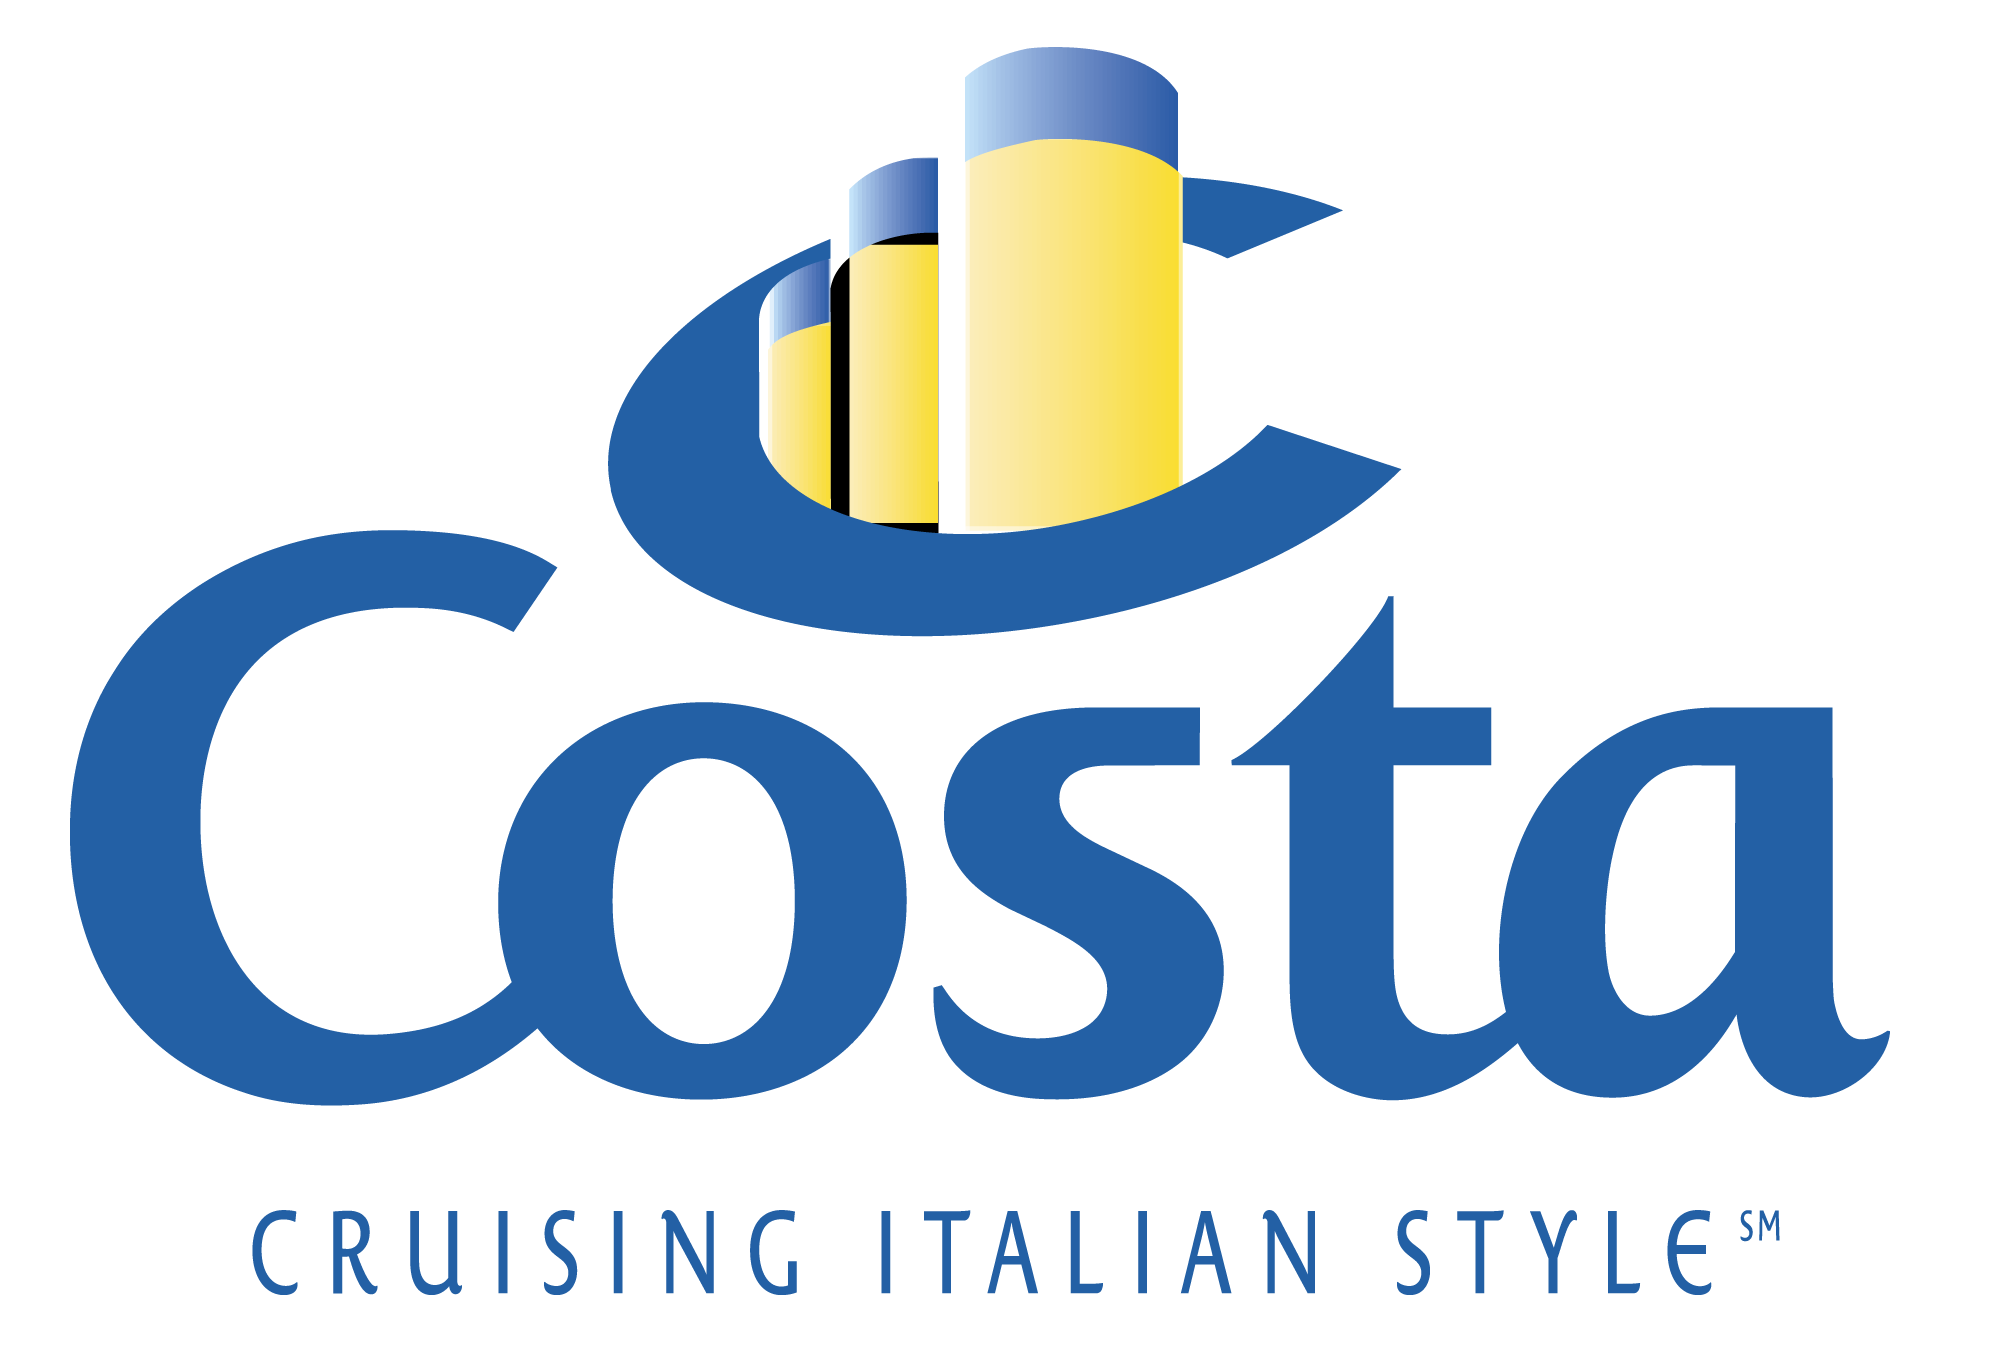 cruise clipart logo